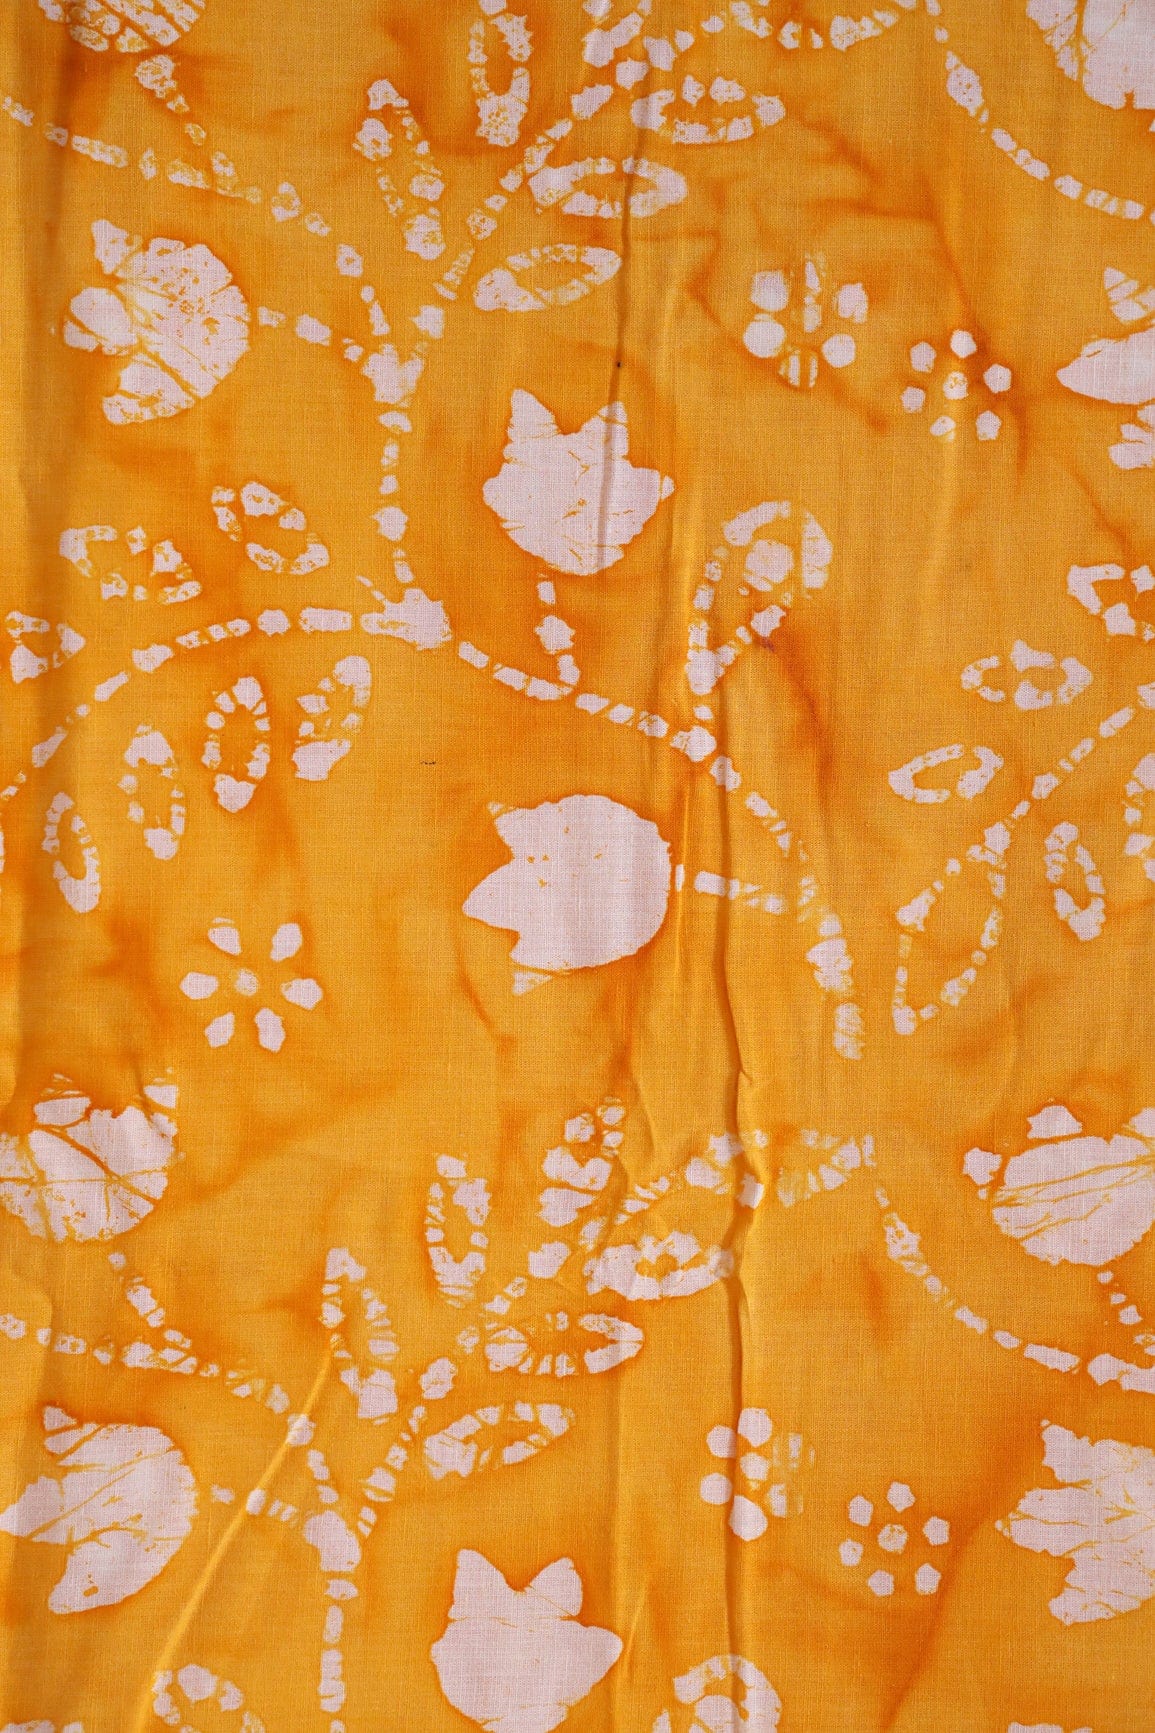 doeraa Prints White And Yellow Floral Pattern Batik Handblock Organic Cotton Fabric